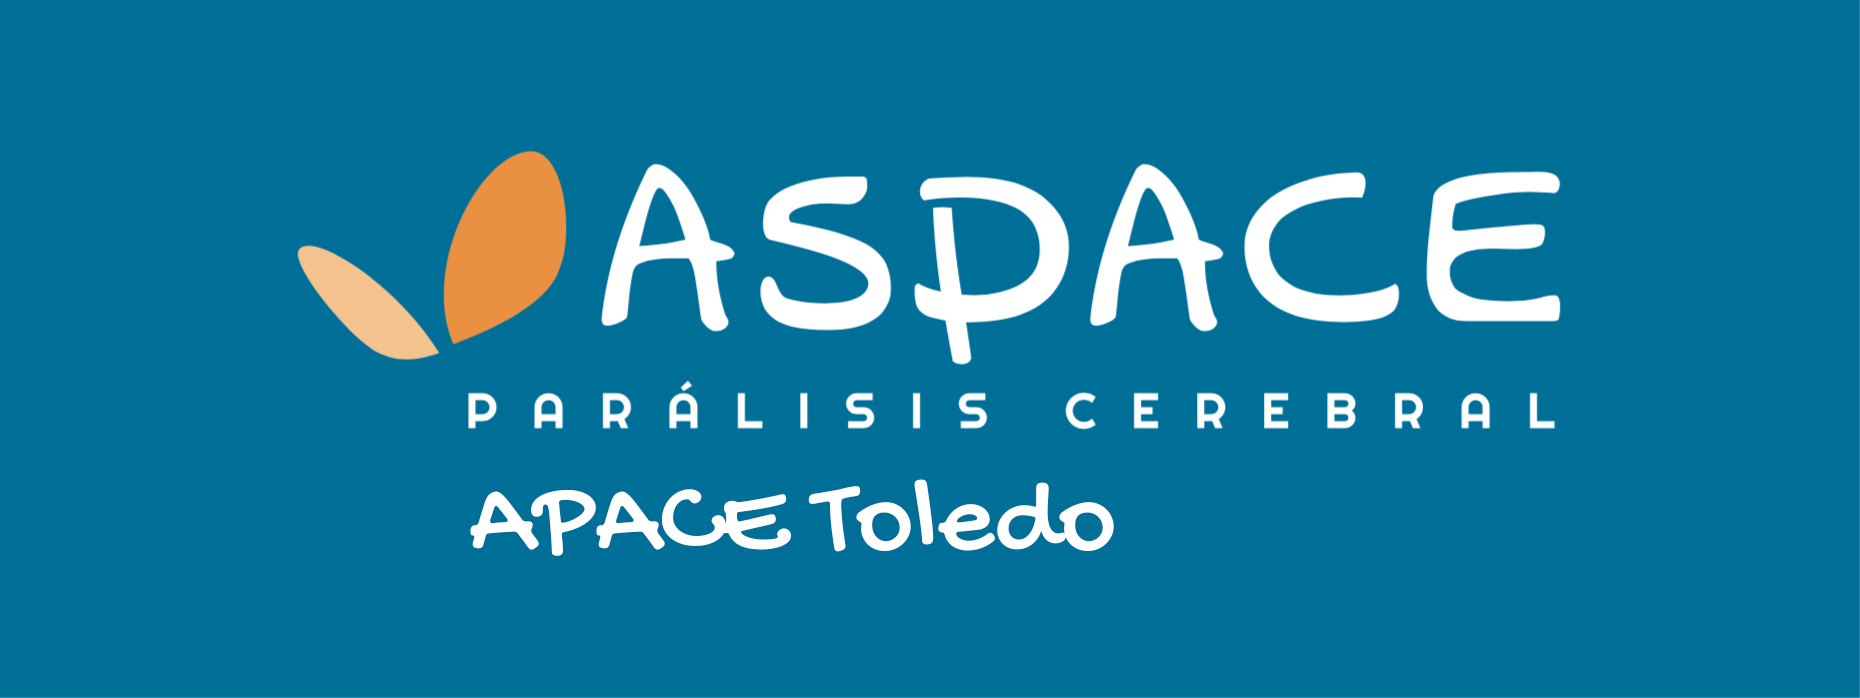 Logo Apace Toledo